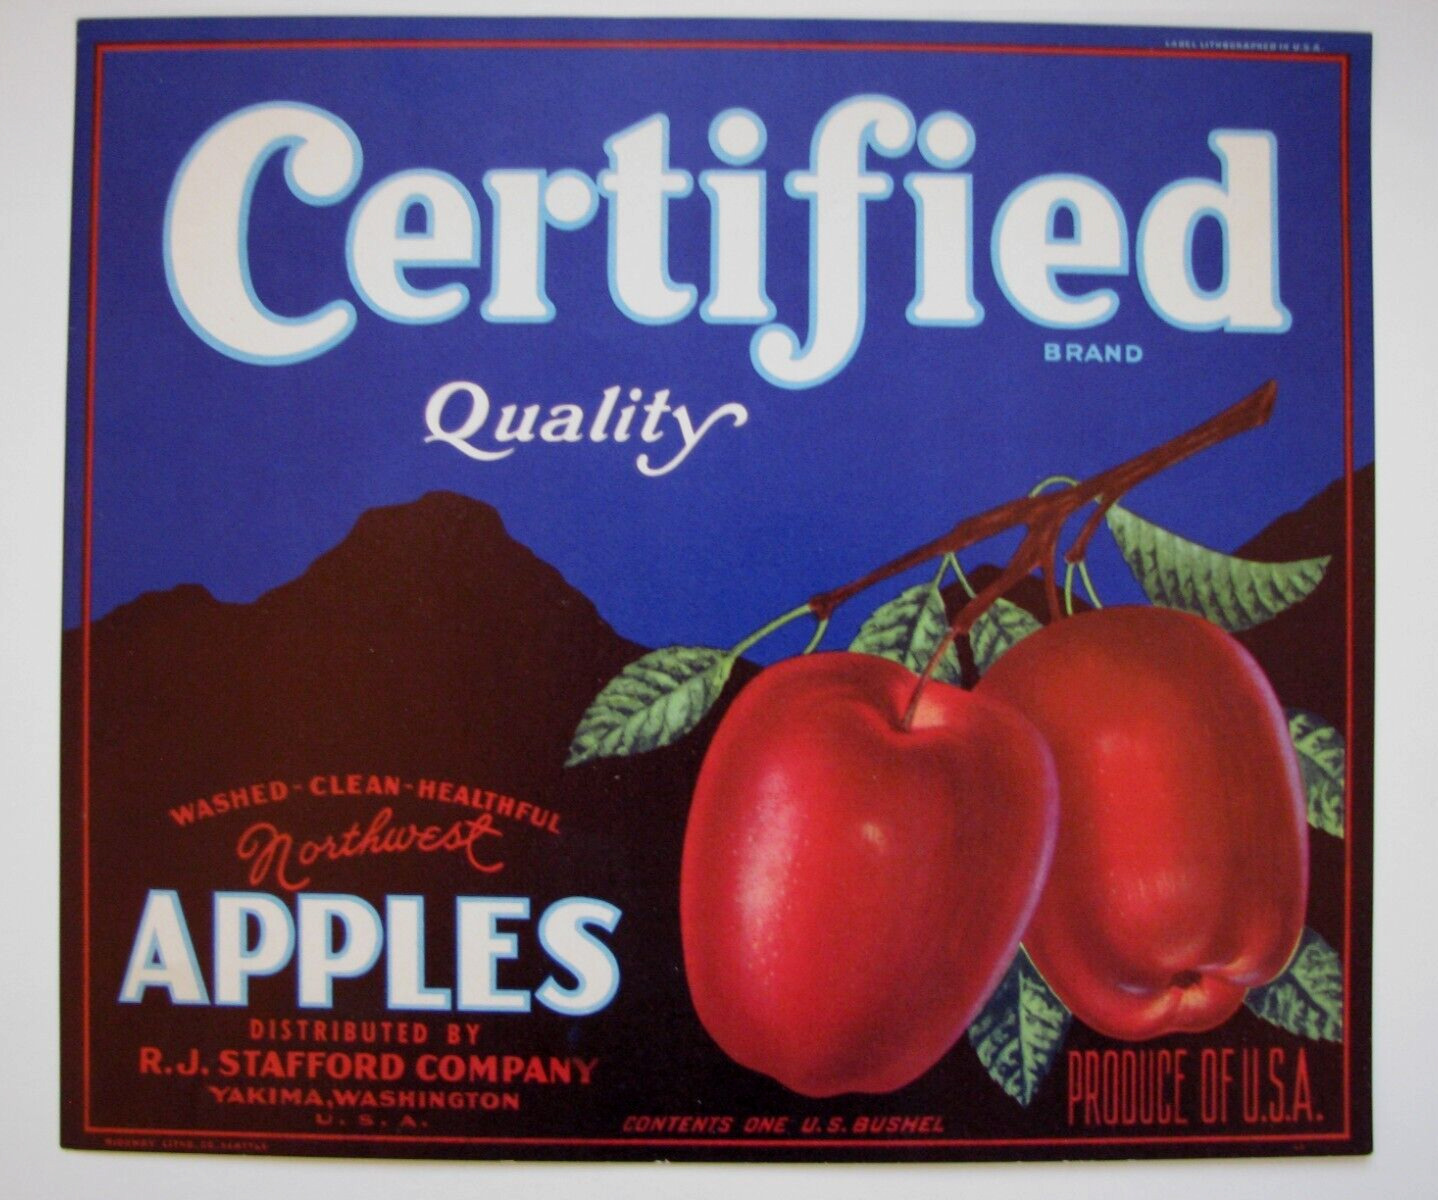 Original CERTIFIED apple crate label R.J. Strafford Company Yakima WA blue/black